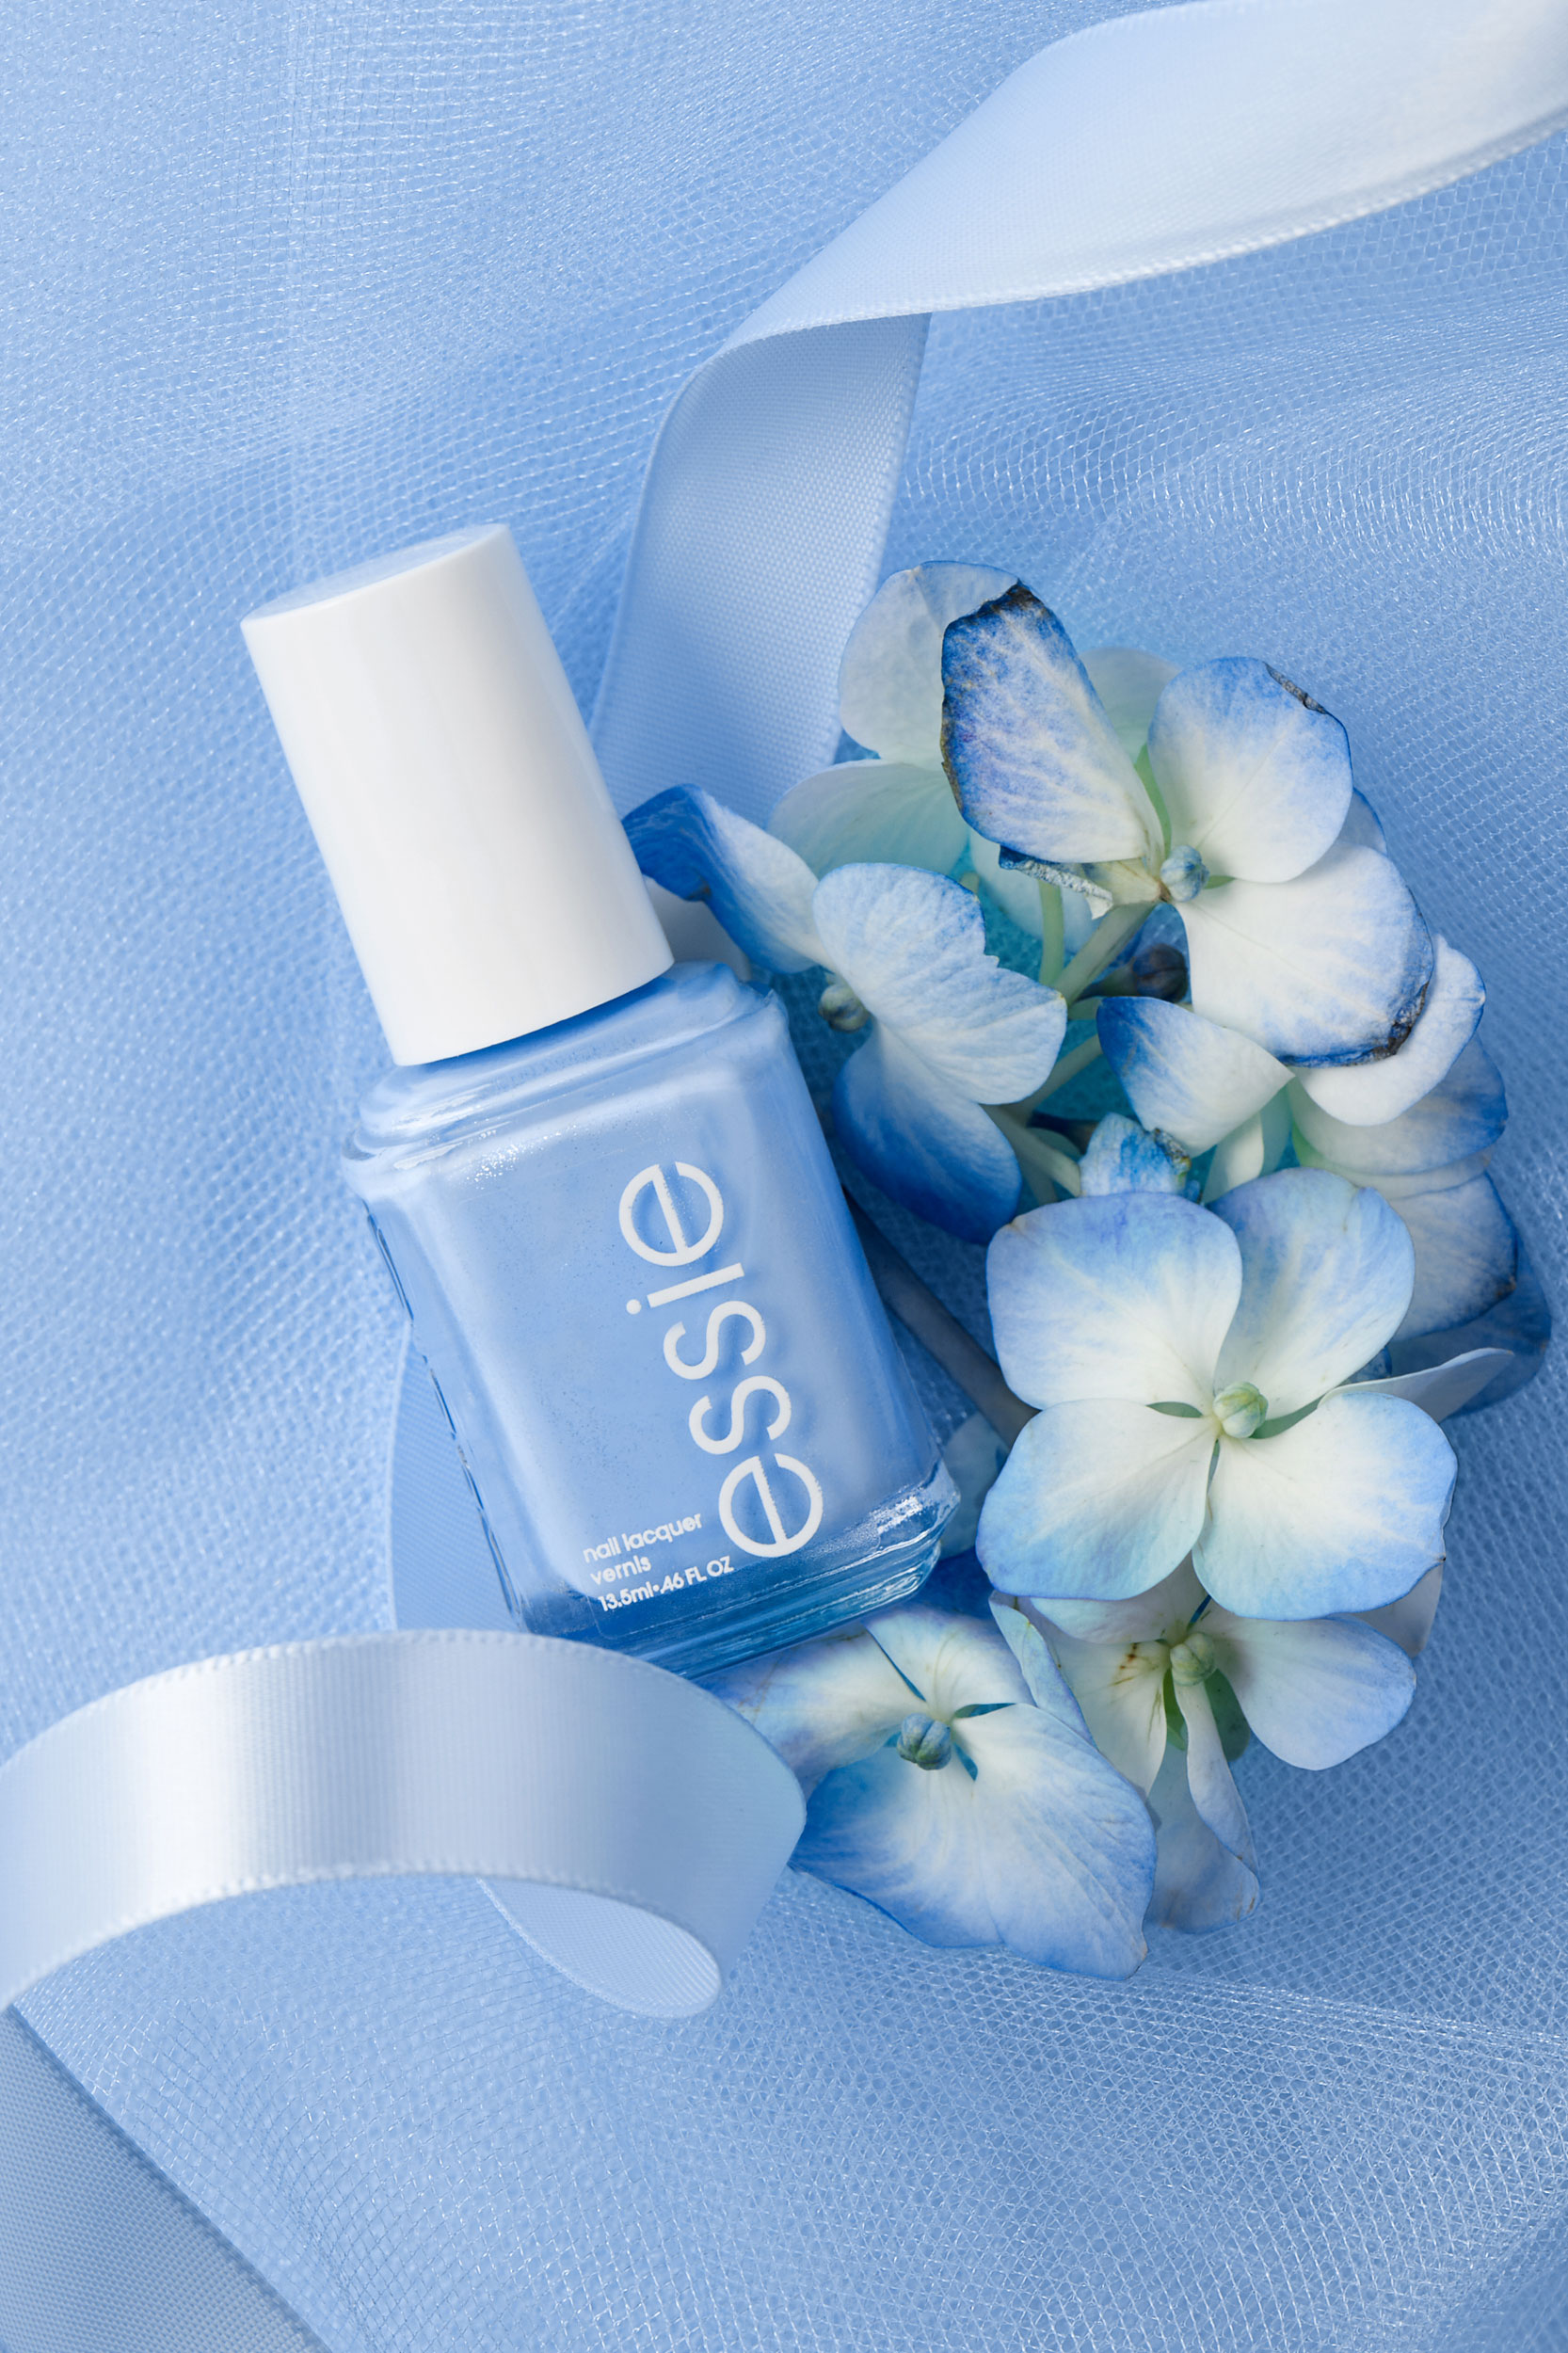 Cornflower blue nail polish bottle nestled in tulle, ribbon and flowers